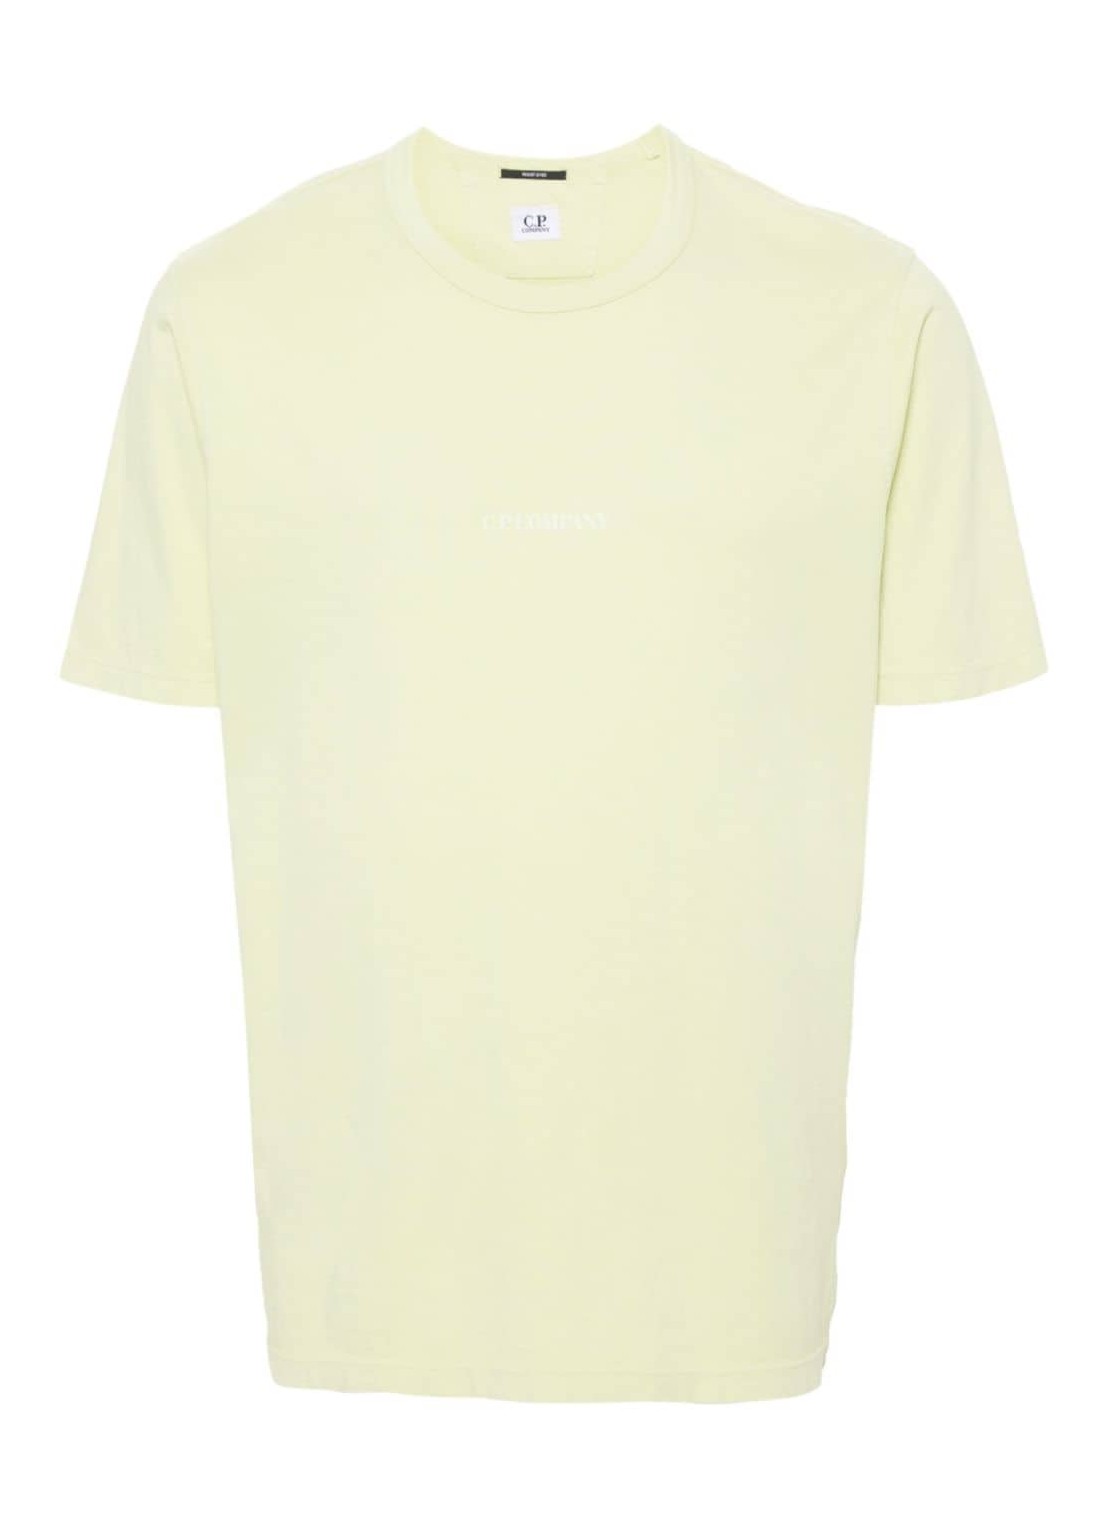 Camiseta c.p.company t-shirt man 24/1 jersey resist dyed logo t-shirt 16cmts085a005431r 613 talla L
